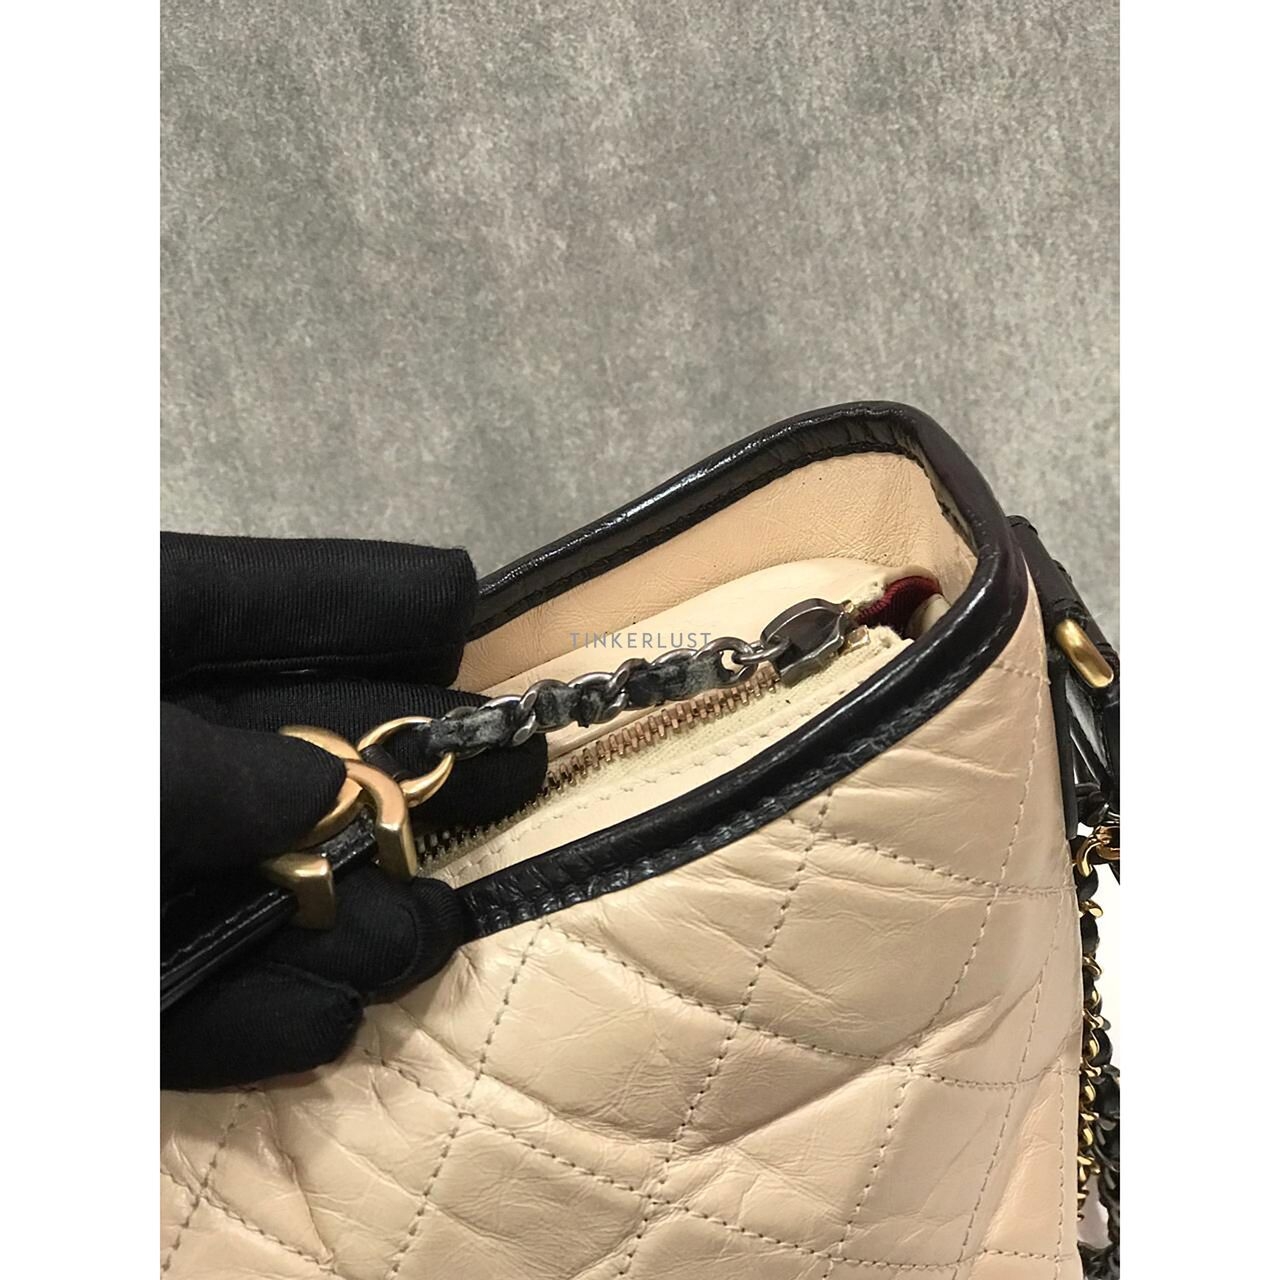 Chanel Gabrielle Medium Black & Beige # 27 Sling Bag